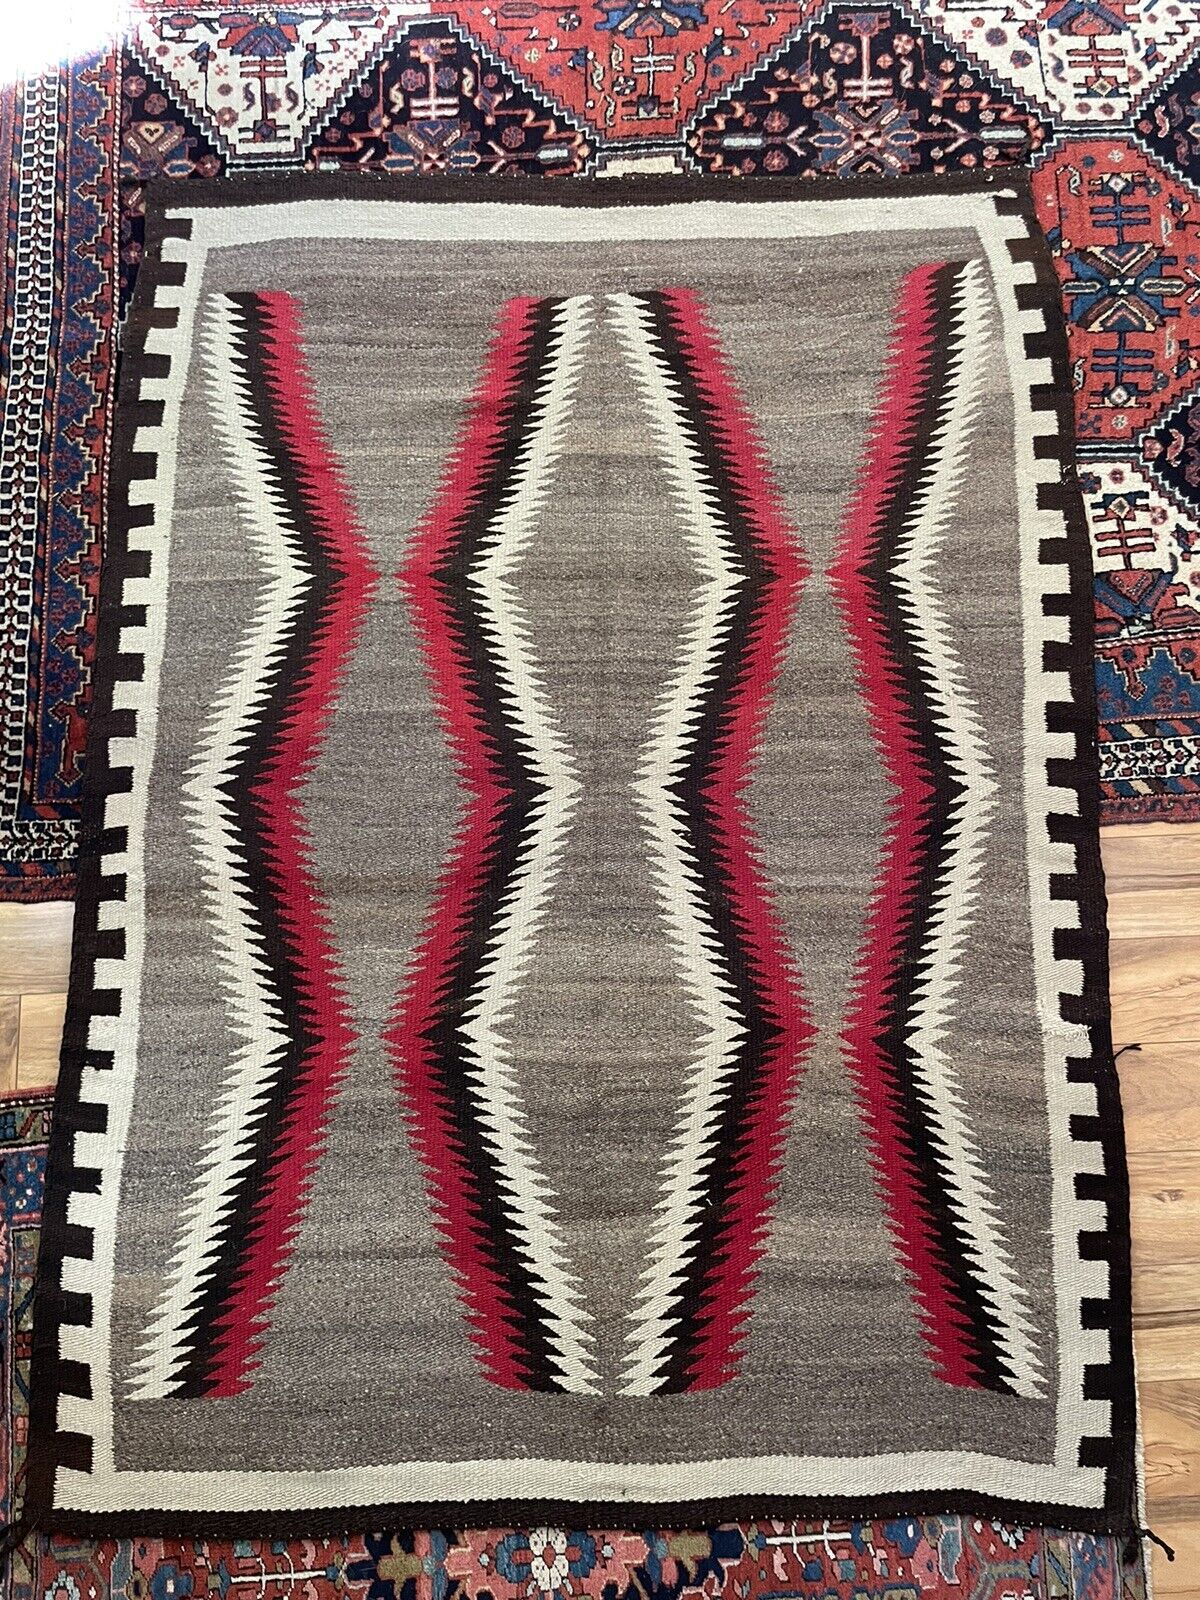 Large Antique Navajo Crystal Rug Blanket 1920s 48”x65”  RARE Eye Dazzler Wow